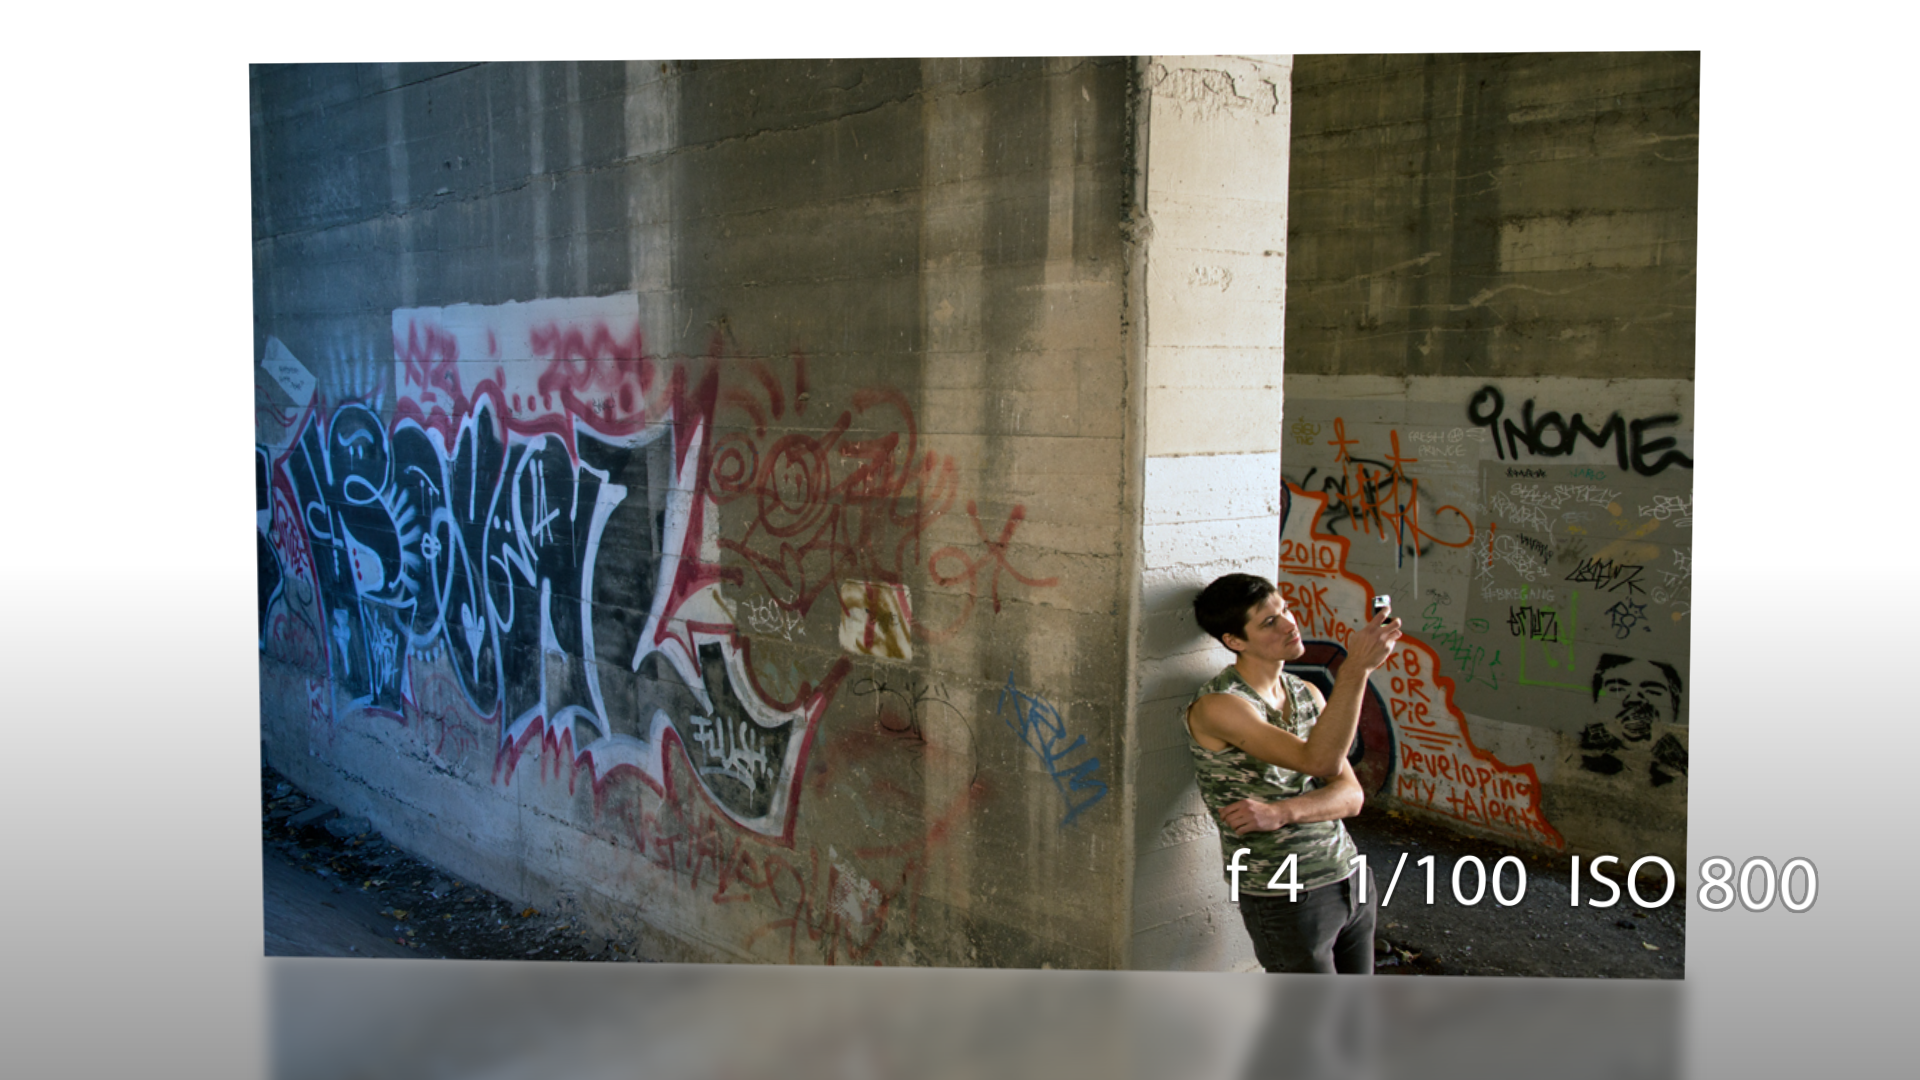 Photographing Graffiti